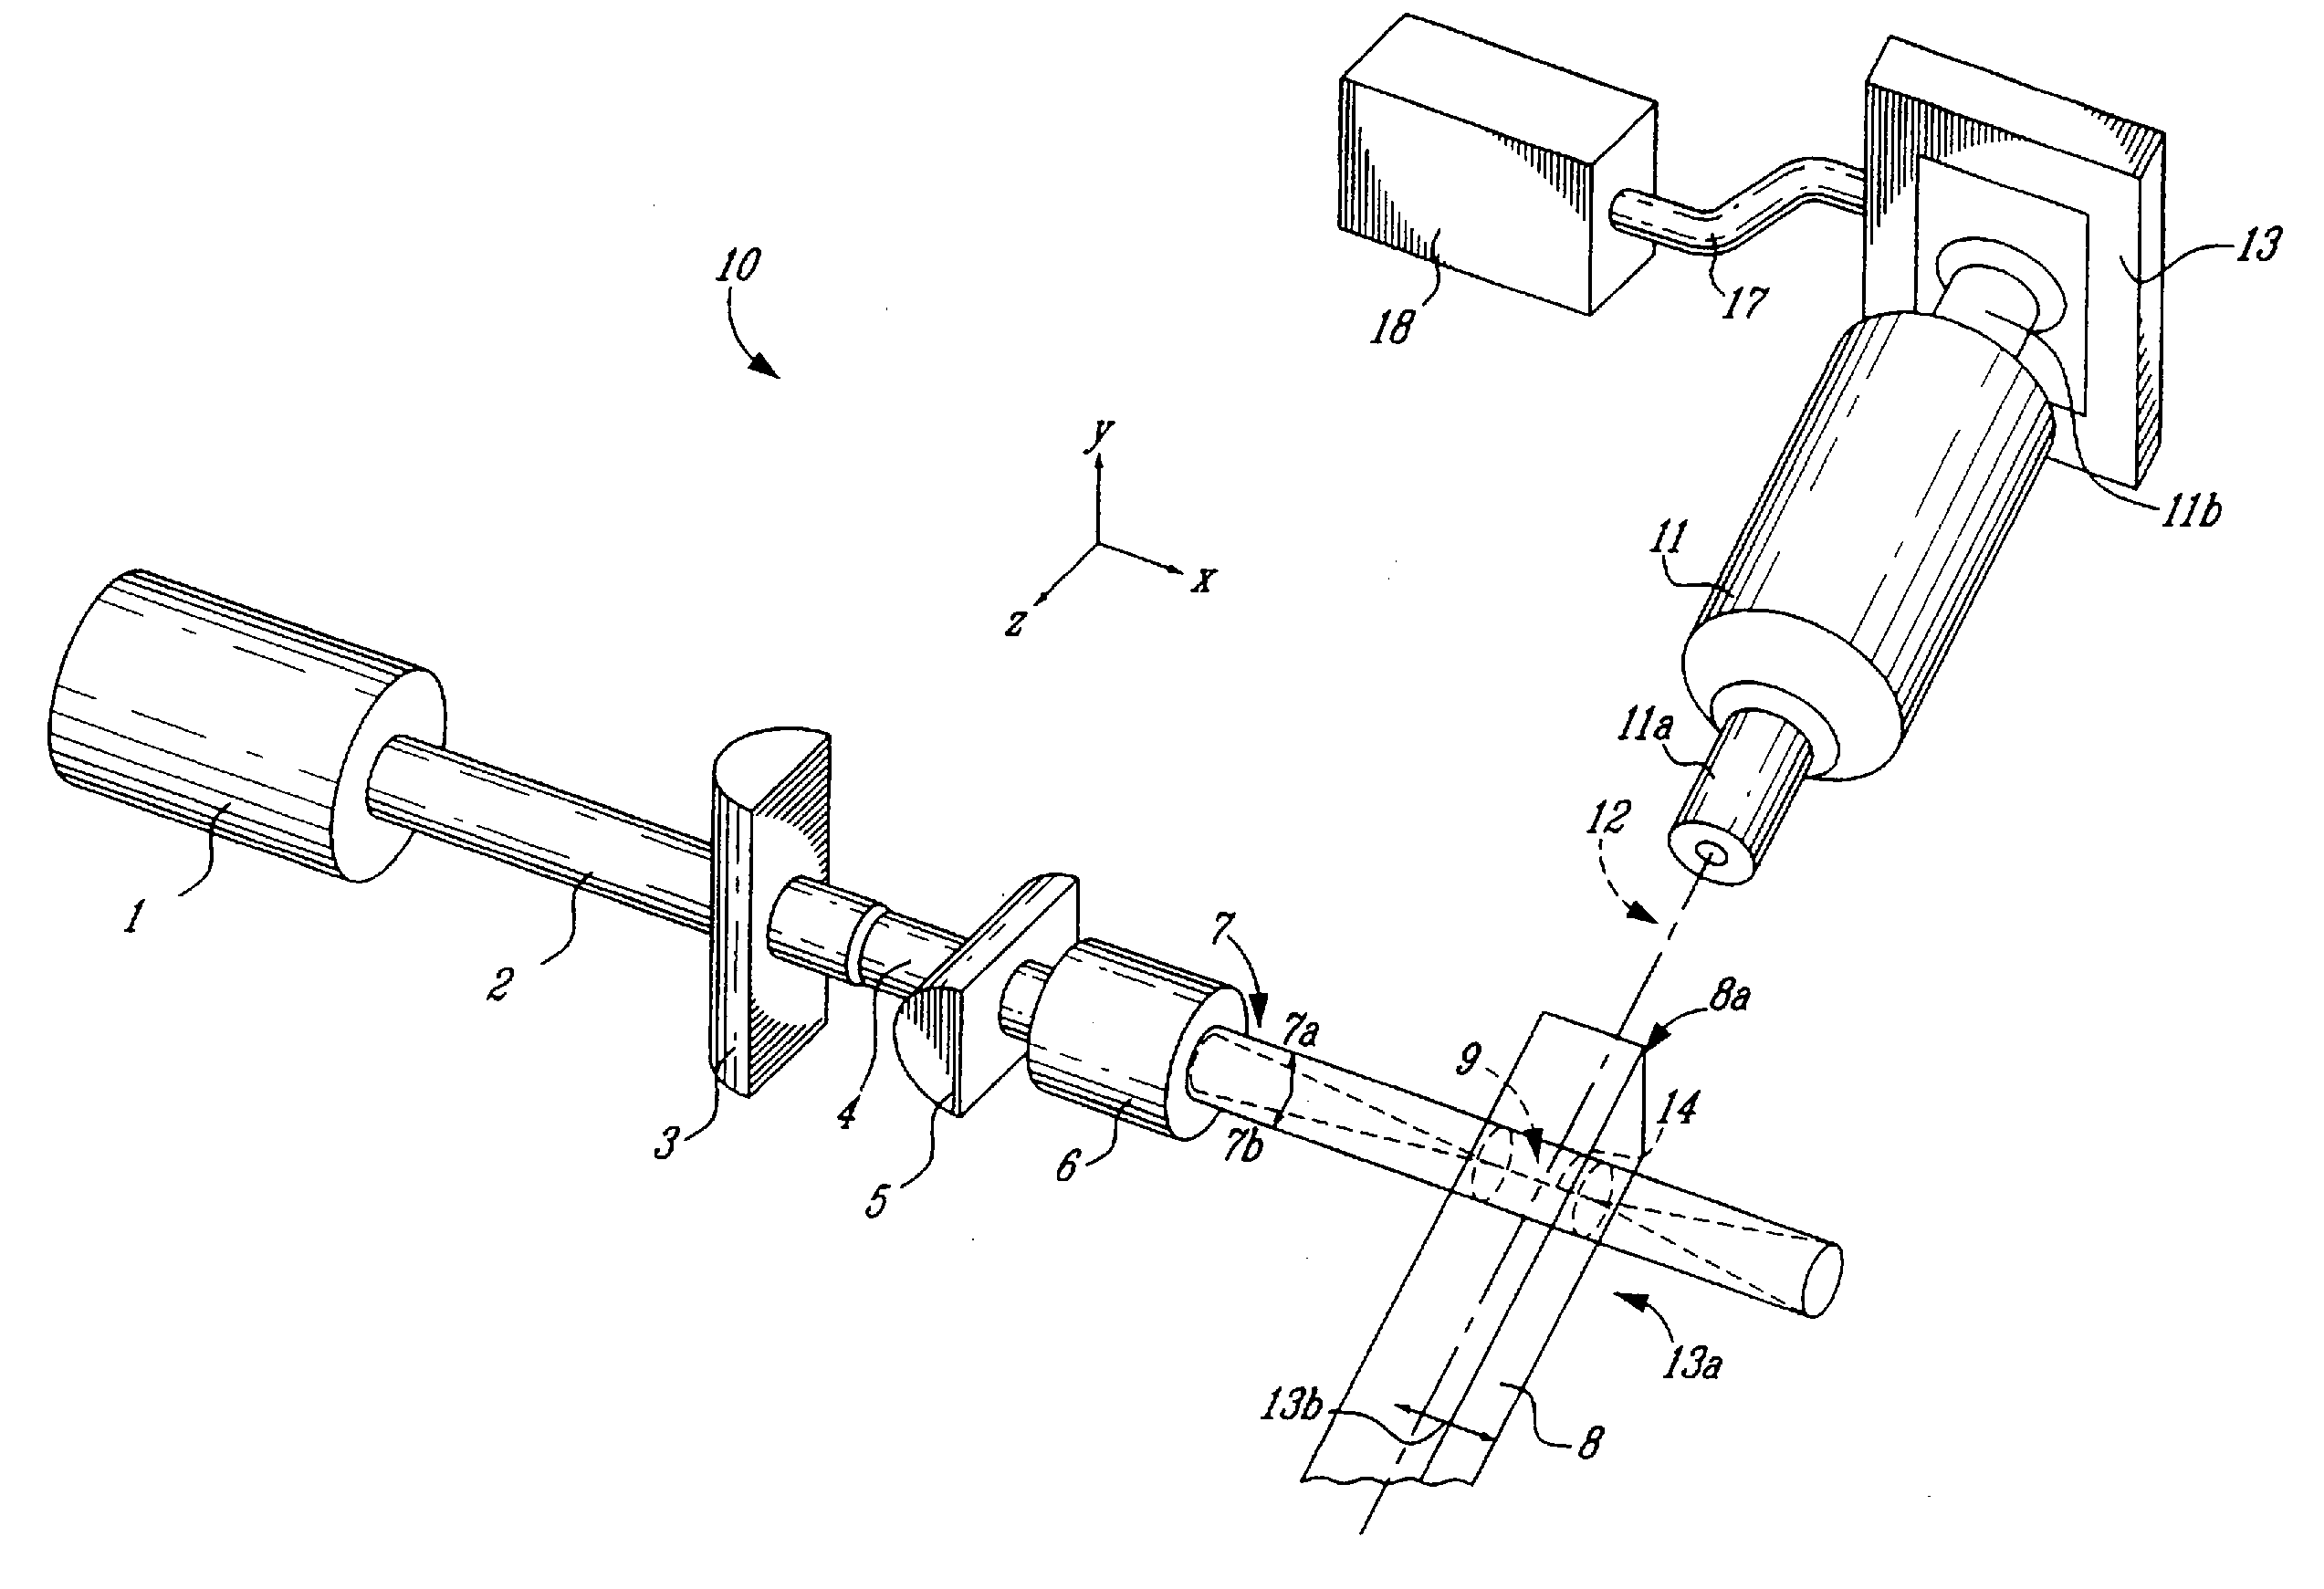 Light Profile Microscopy Apparatus and Method